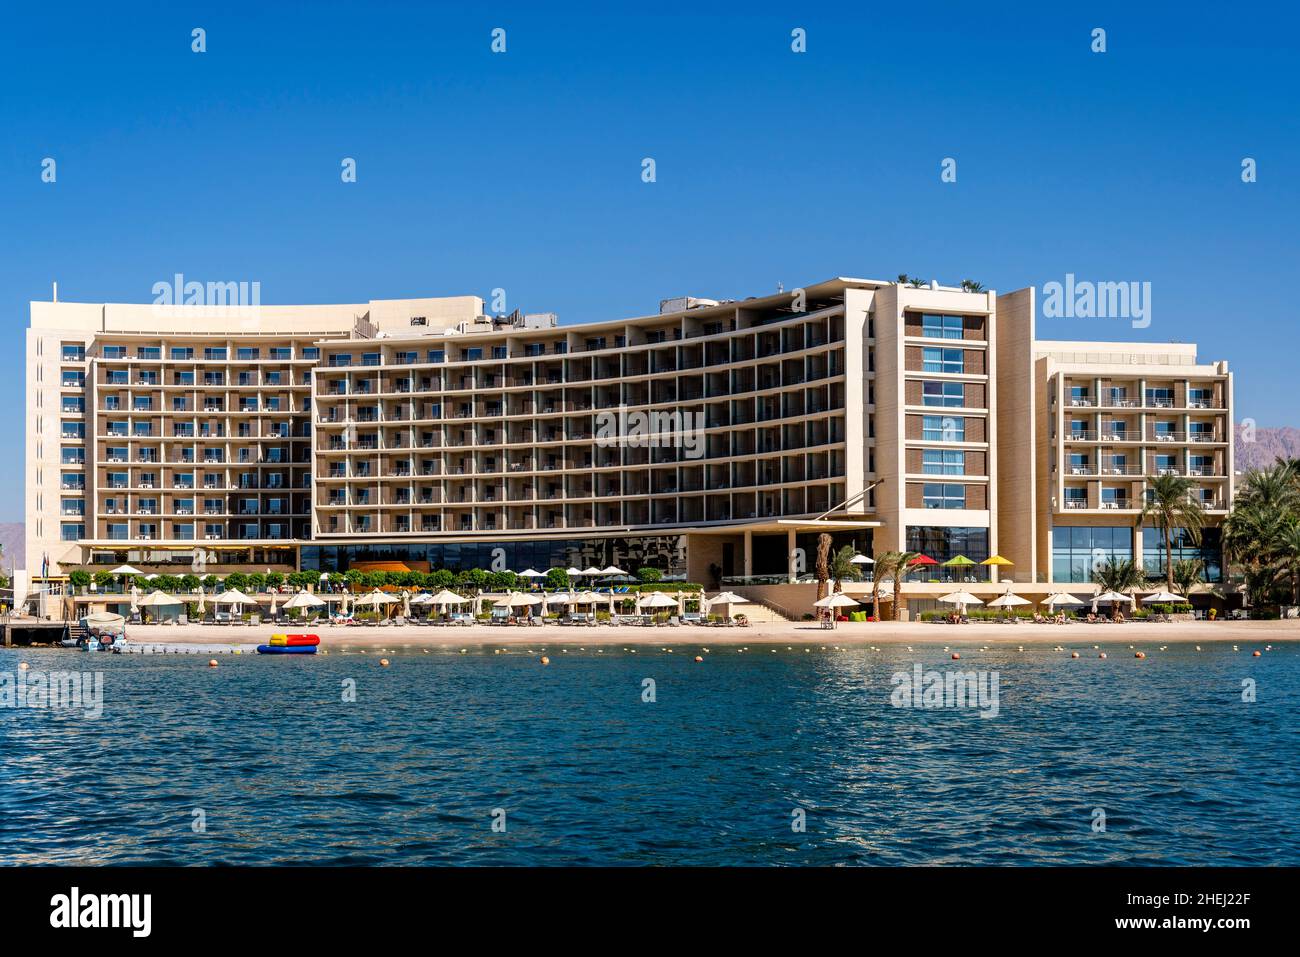 A View Of The Kempinski Hotel From The Gulf of Aqaba, Aqaba, Aqaba  Governorate, Jordan Stock Photo - Alamy